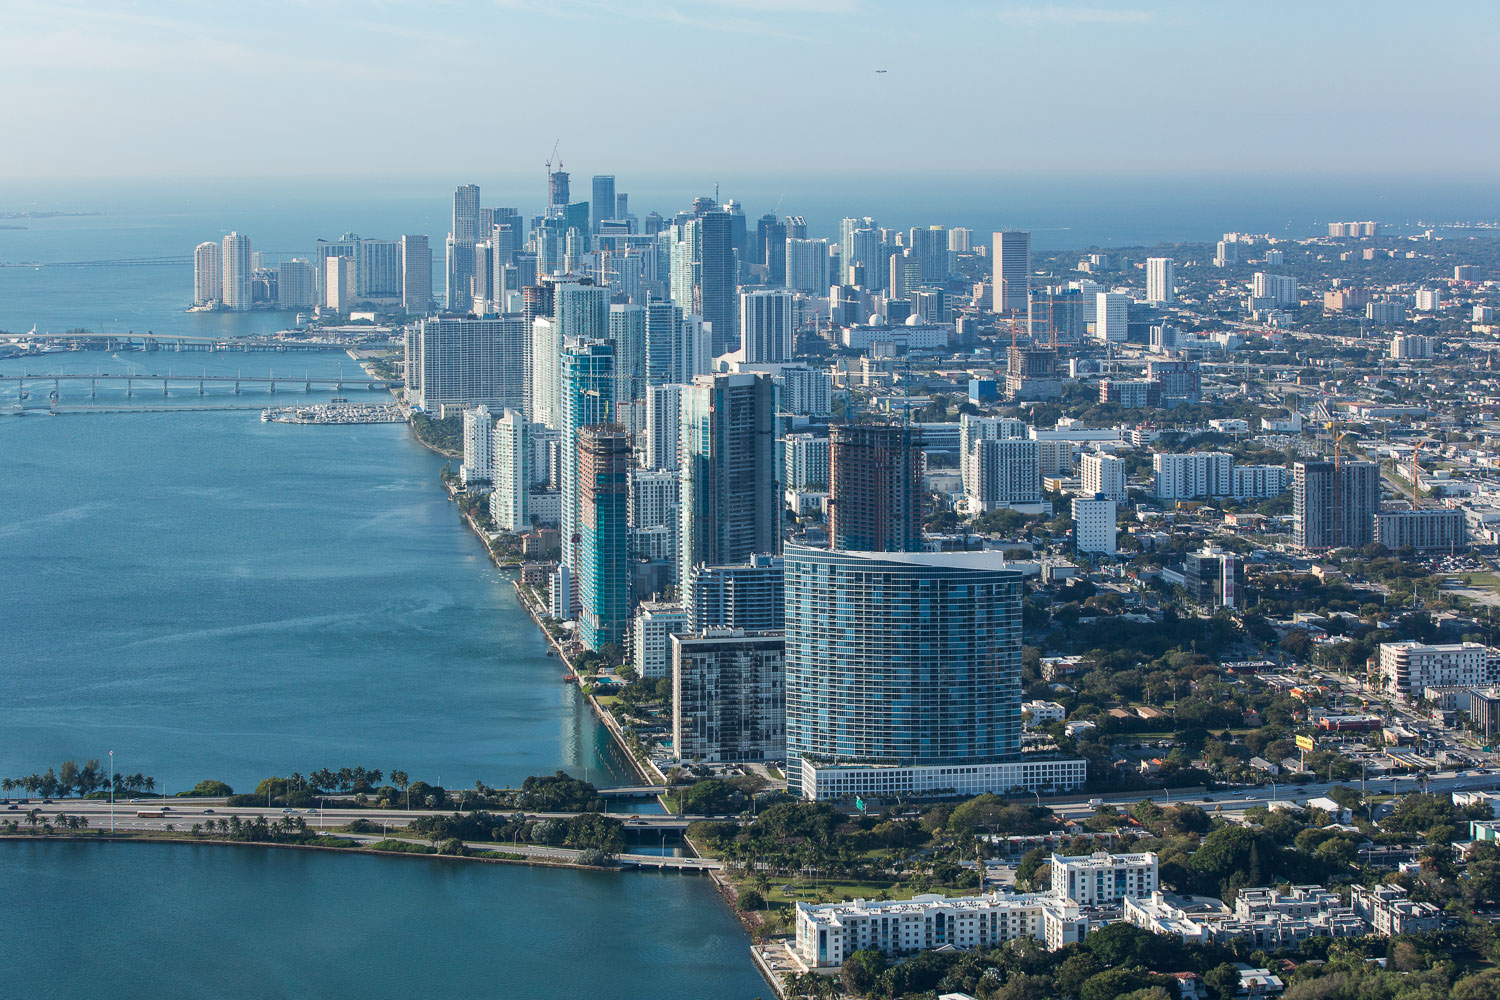 Marina Blue and the Miami skyline behind